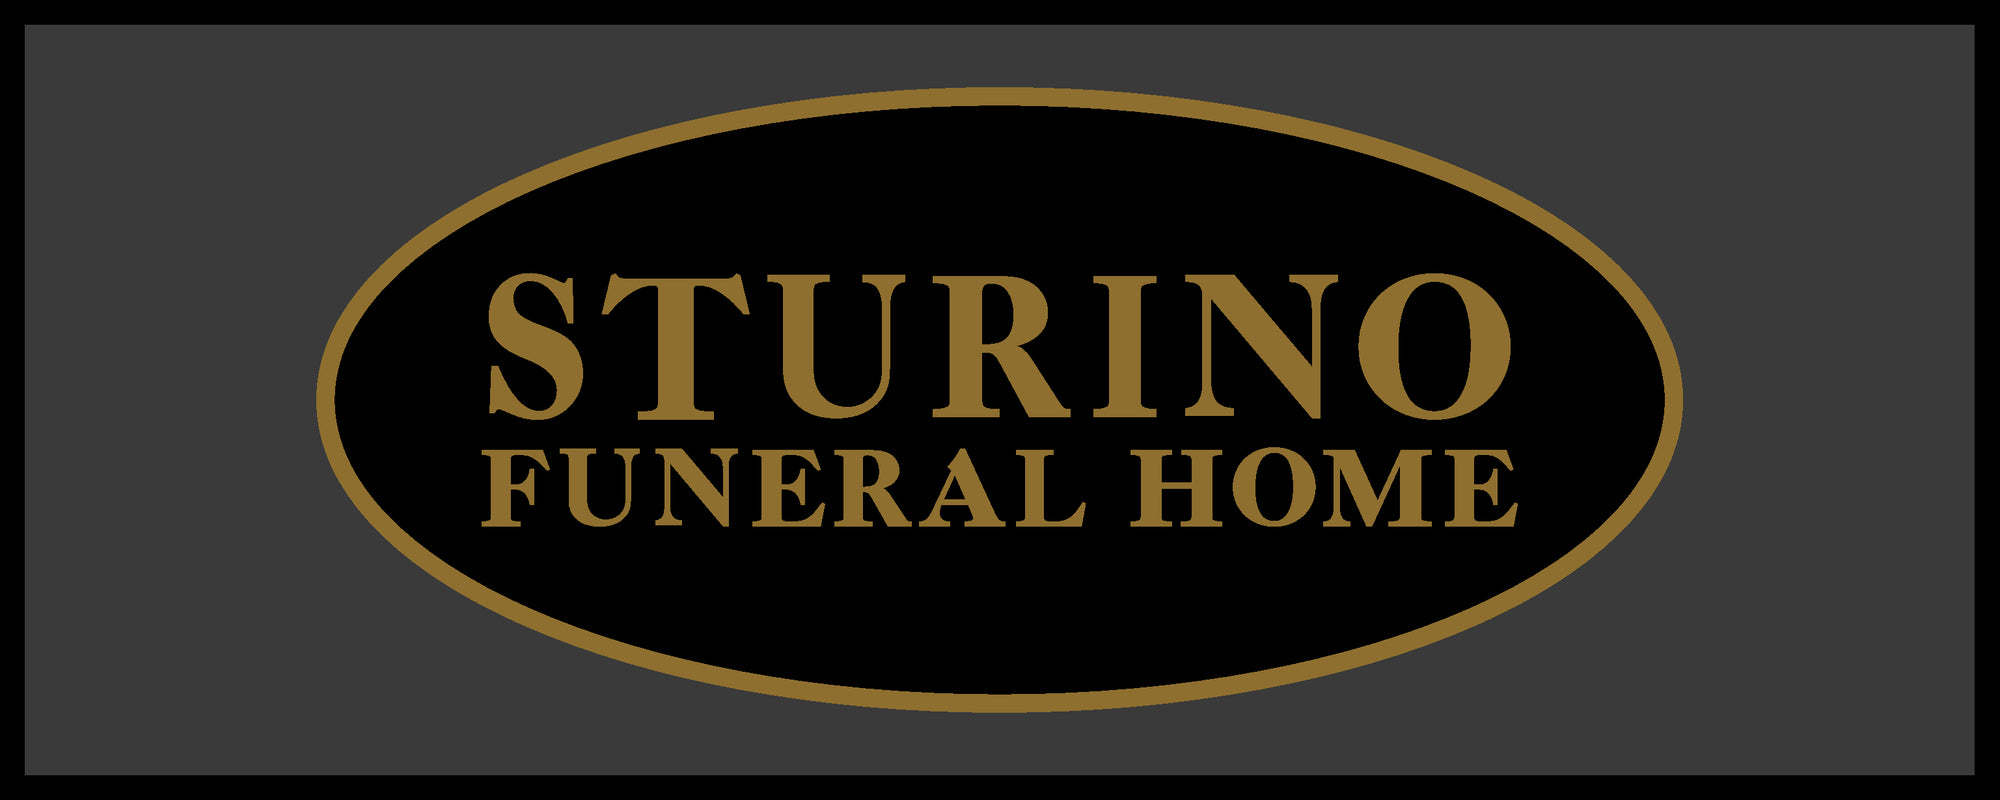 Sturino Funeral Home